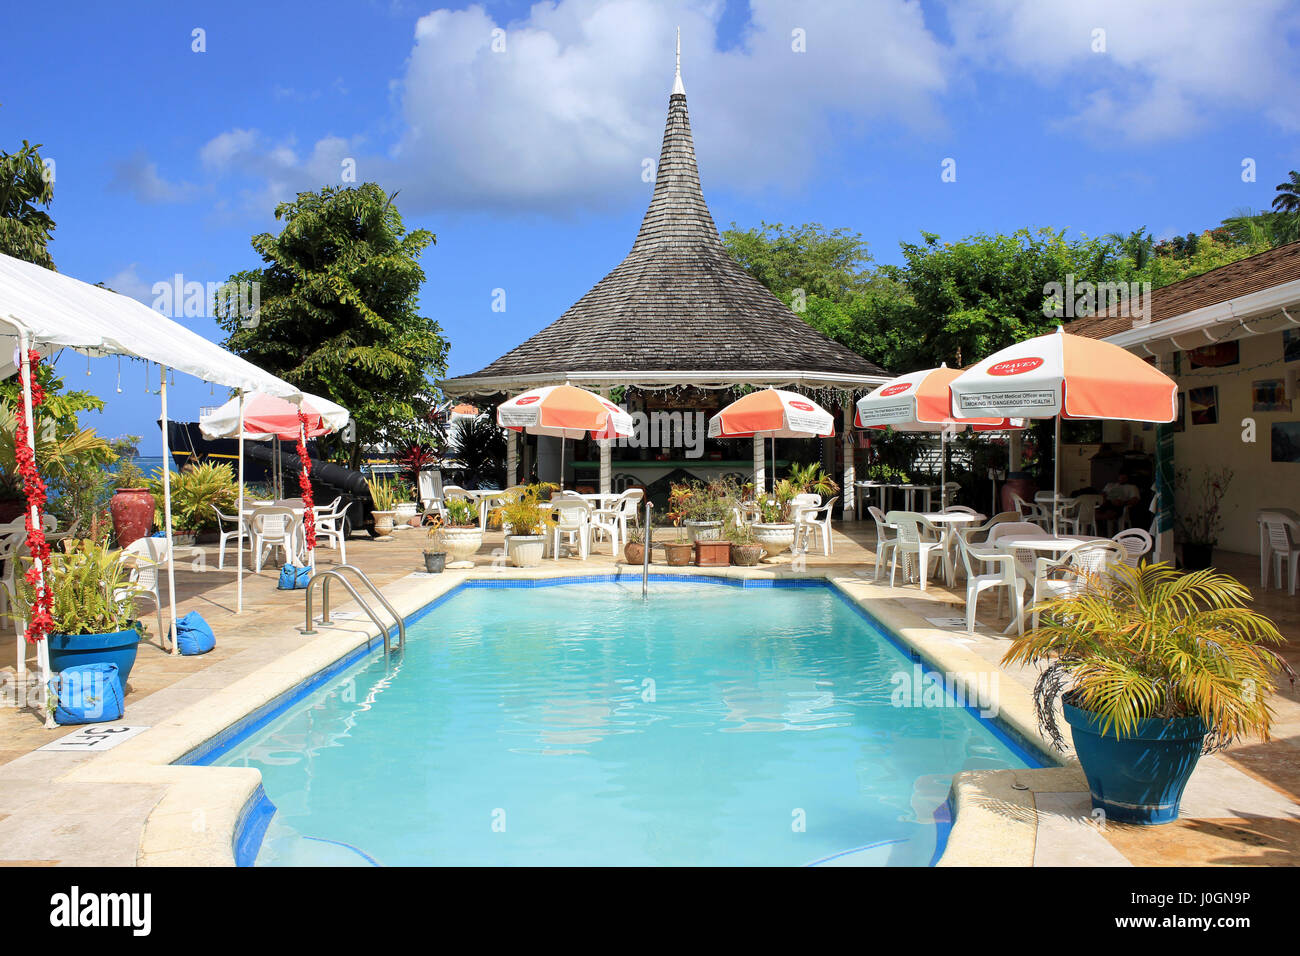 Pool at Marybelle's Pub on the Pier, Errol Flynn Marina, Port Antonio, Jamaica Stock Photo